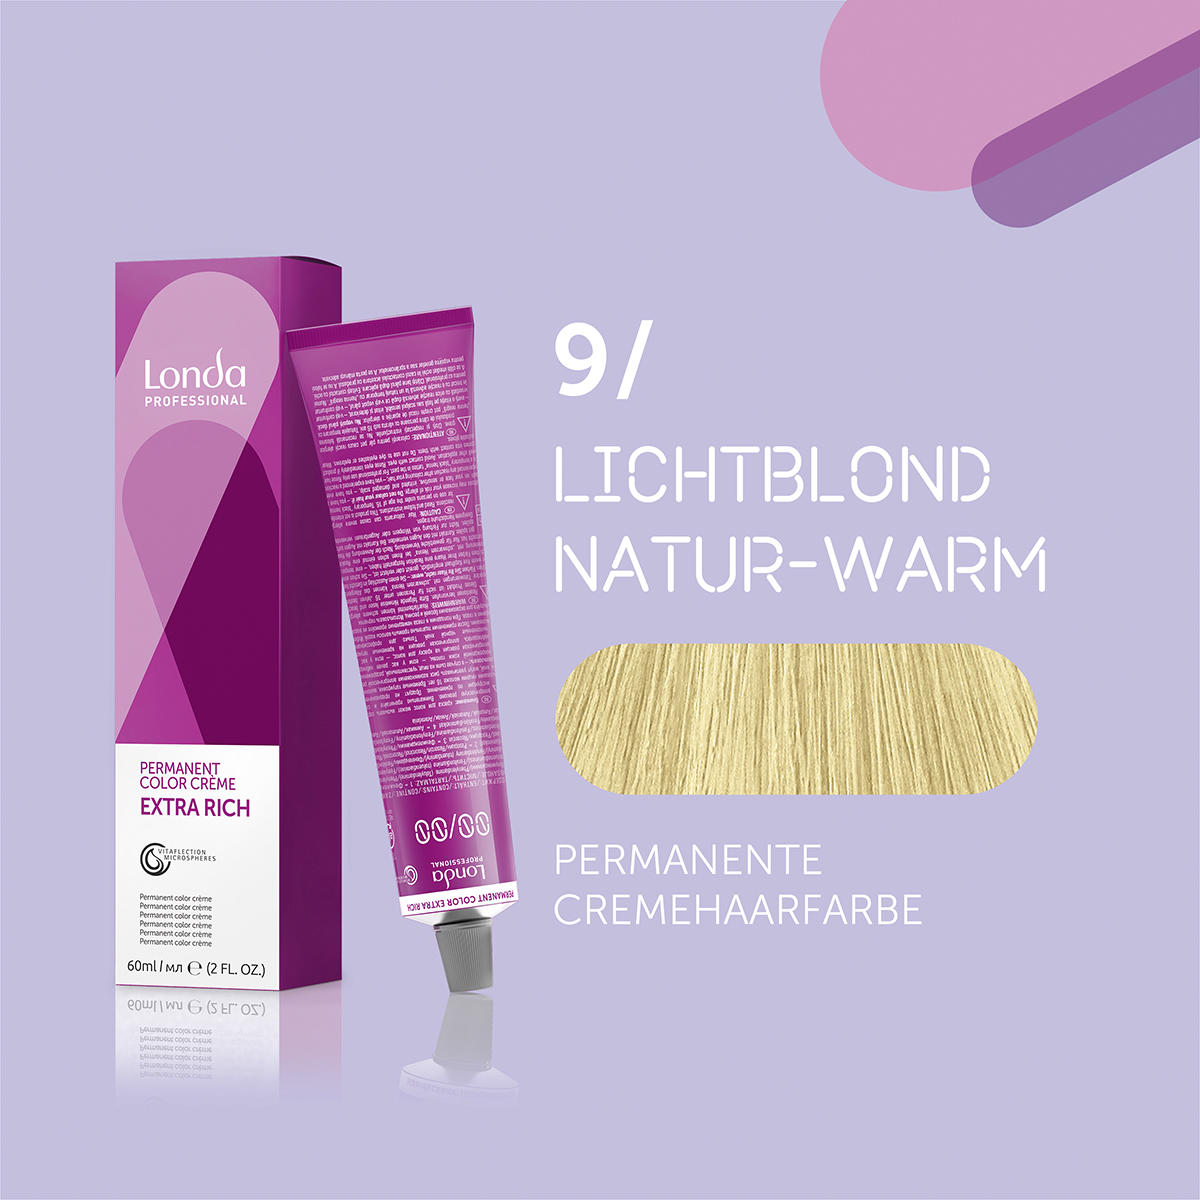 Londa Permanente Cremehaarfarbe Extra Rich 9/ Lichtblond Natur Warm, Tube 60 ml